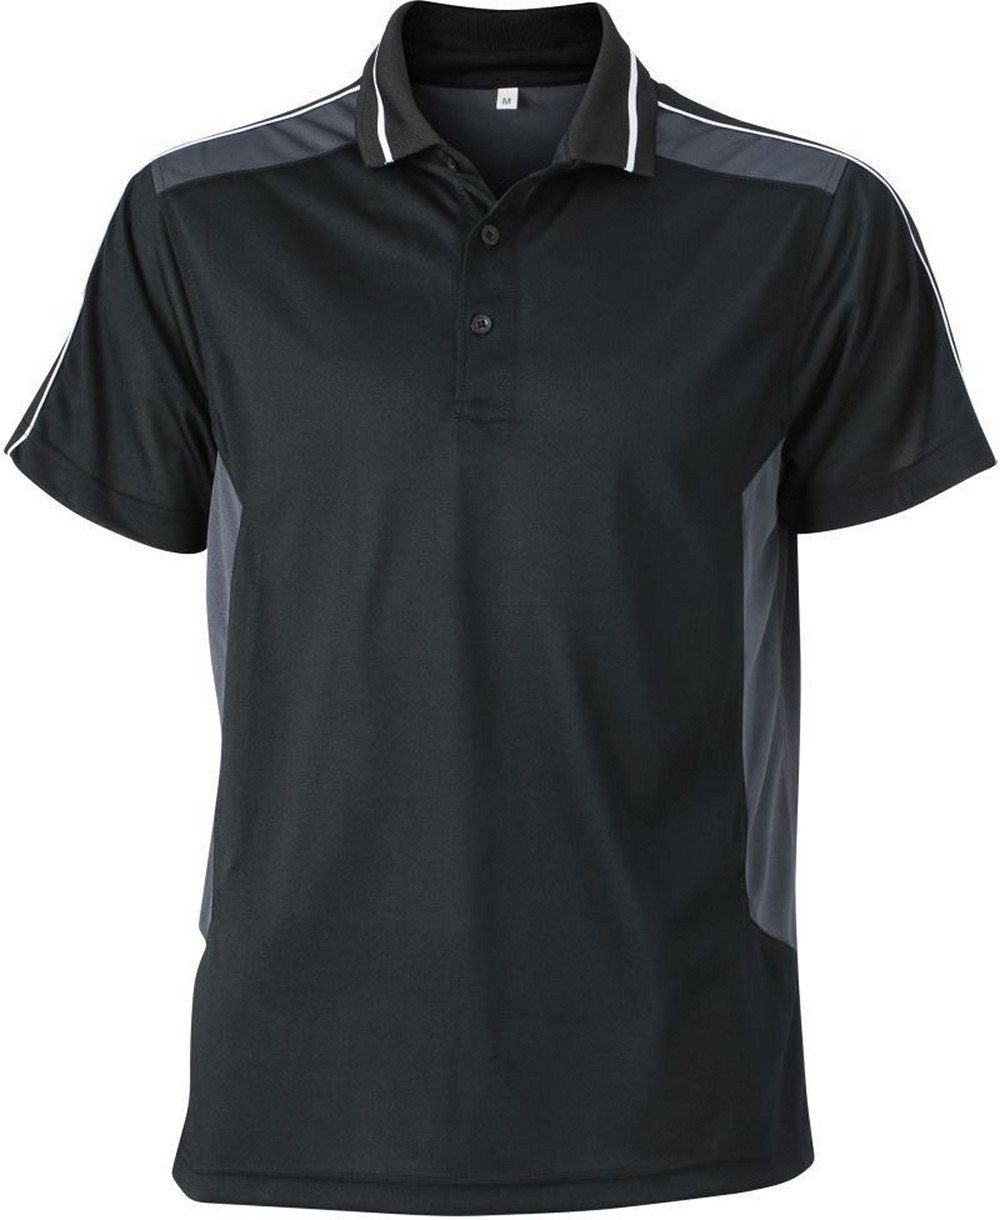 James & Nicholson Poloshirt JN 828 Herren Workwear Piqué Polo schwarz